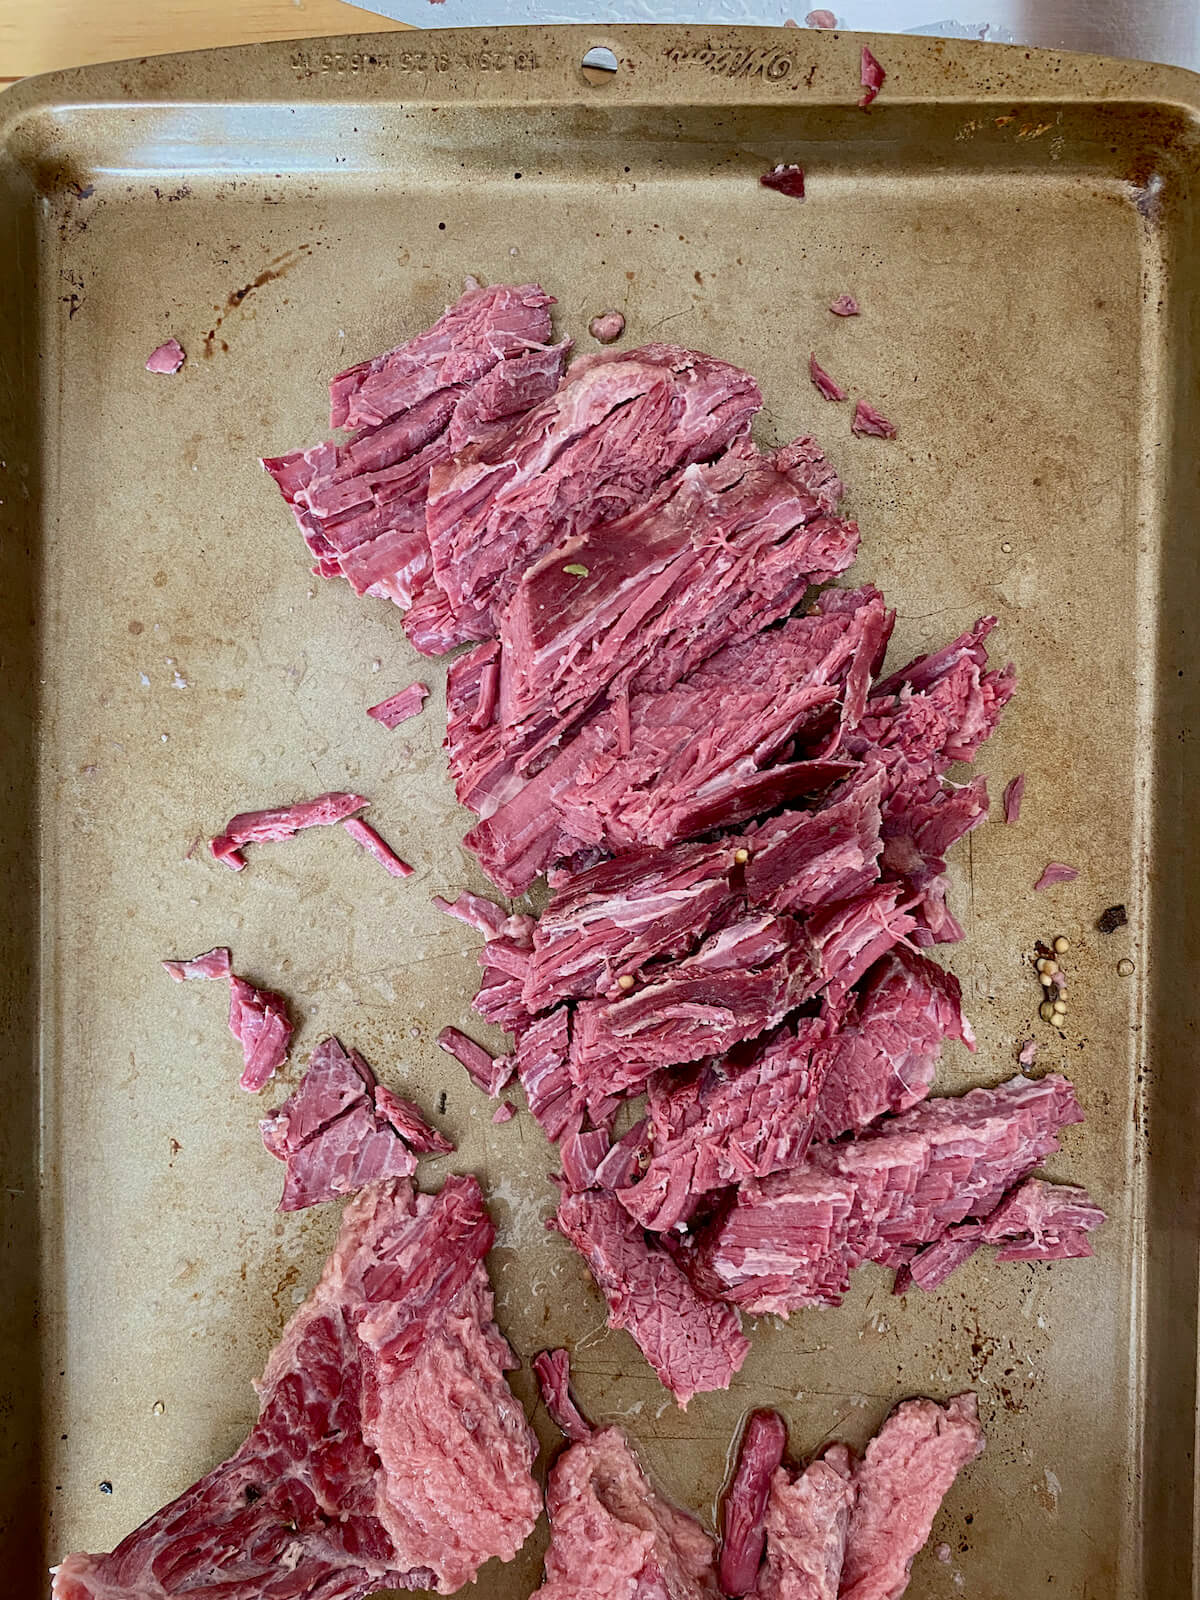 Sliced corned beef on a rimmed baking sheet.